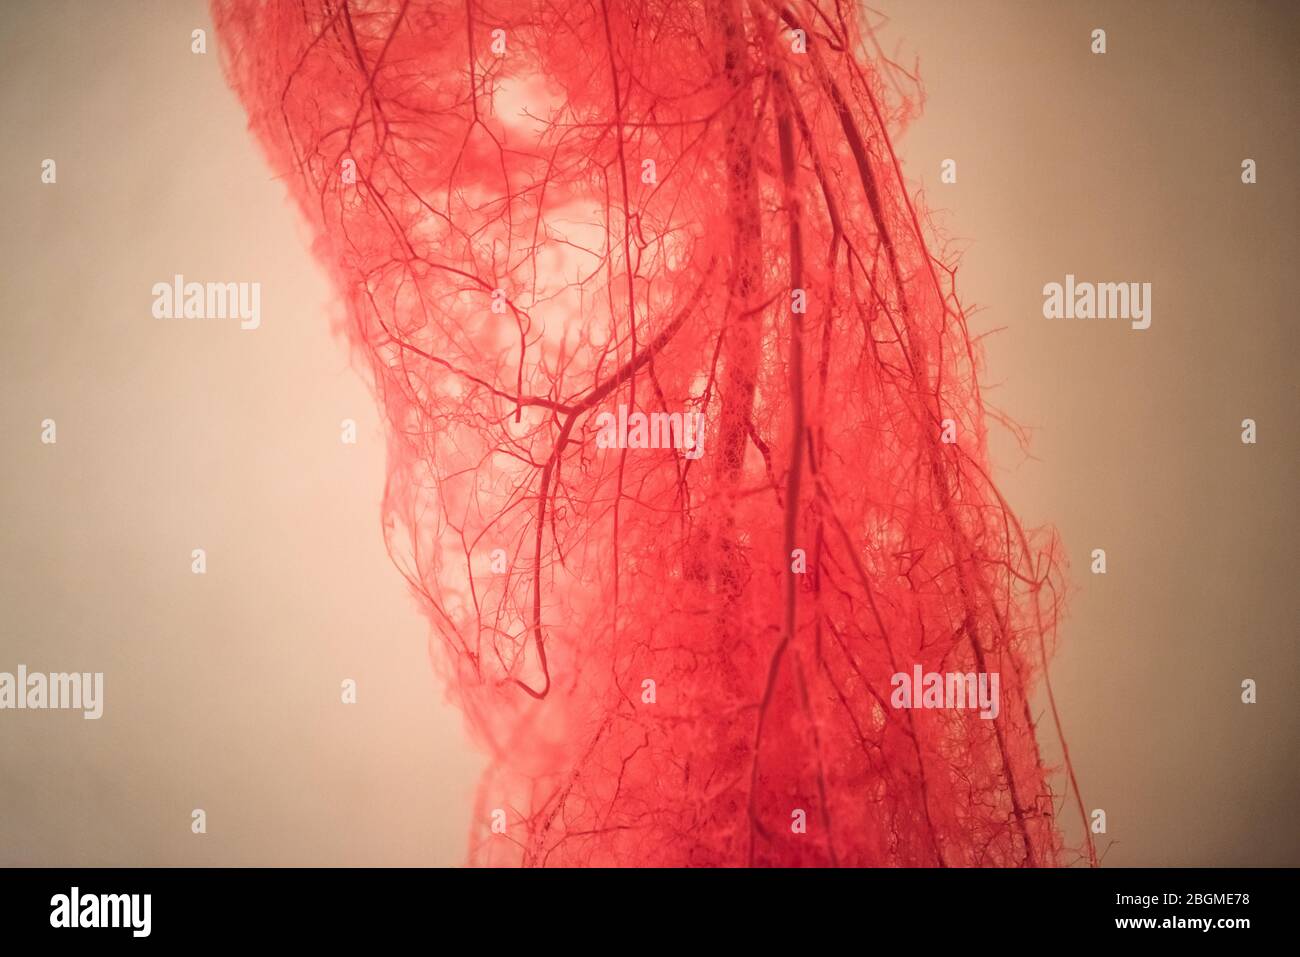 Blood Vessels of human leg Stock Photo